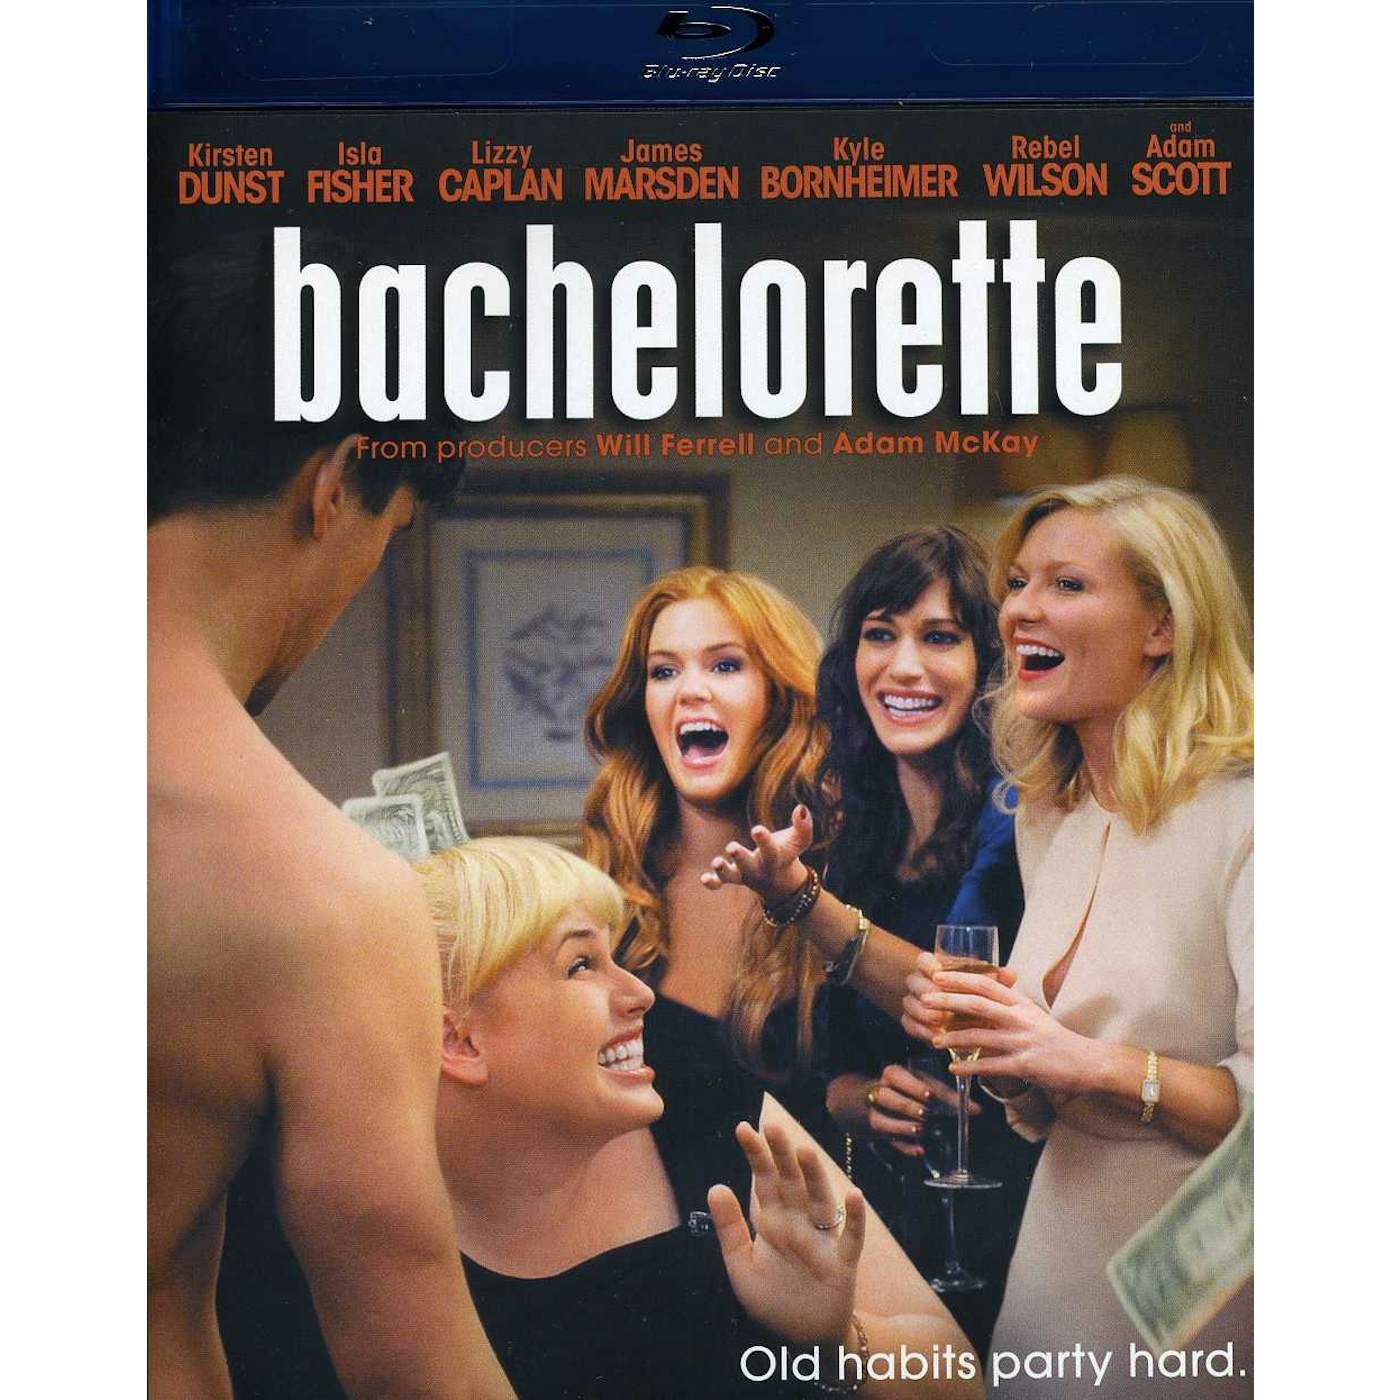 BACHELORETTE Blu-ray